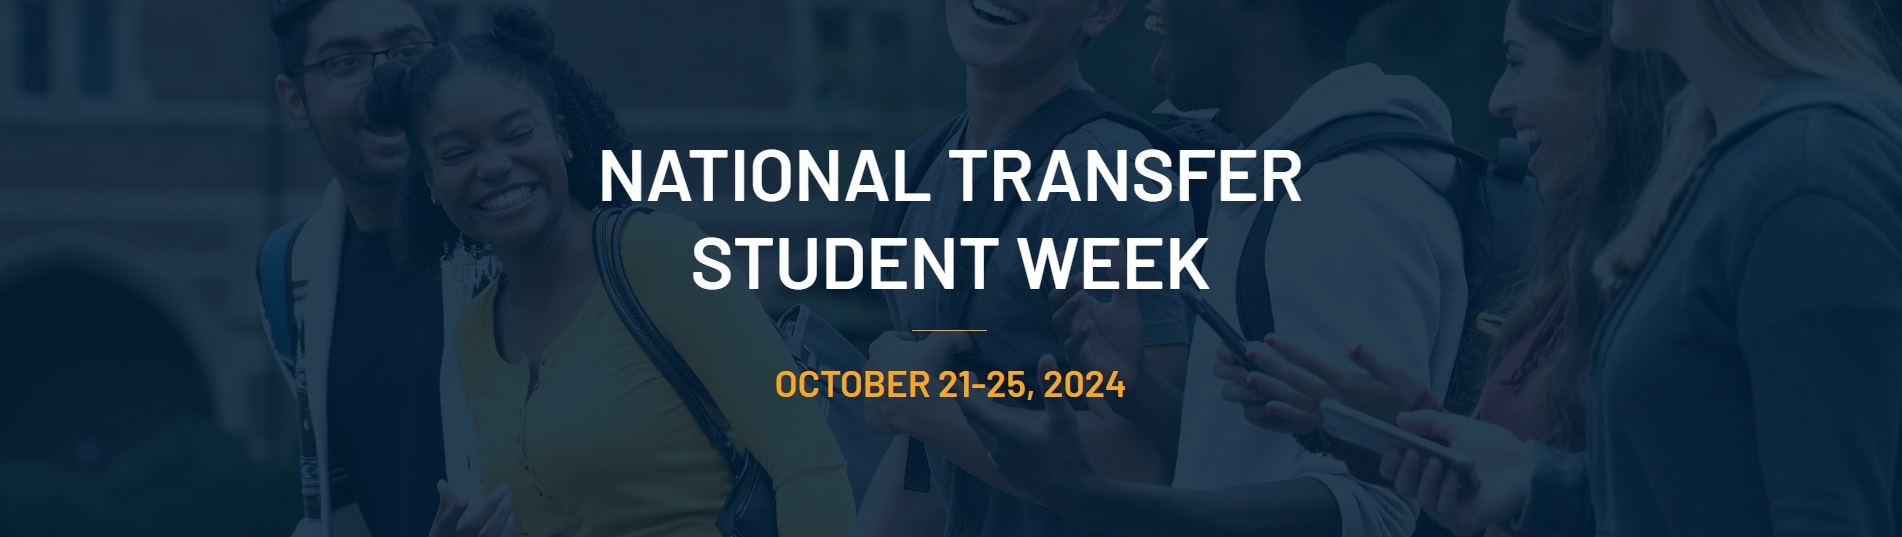 National Transfer Student Week (NTSW)